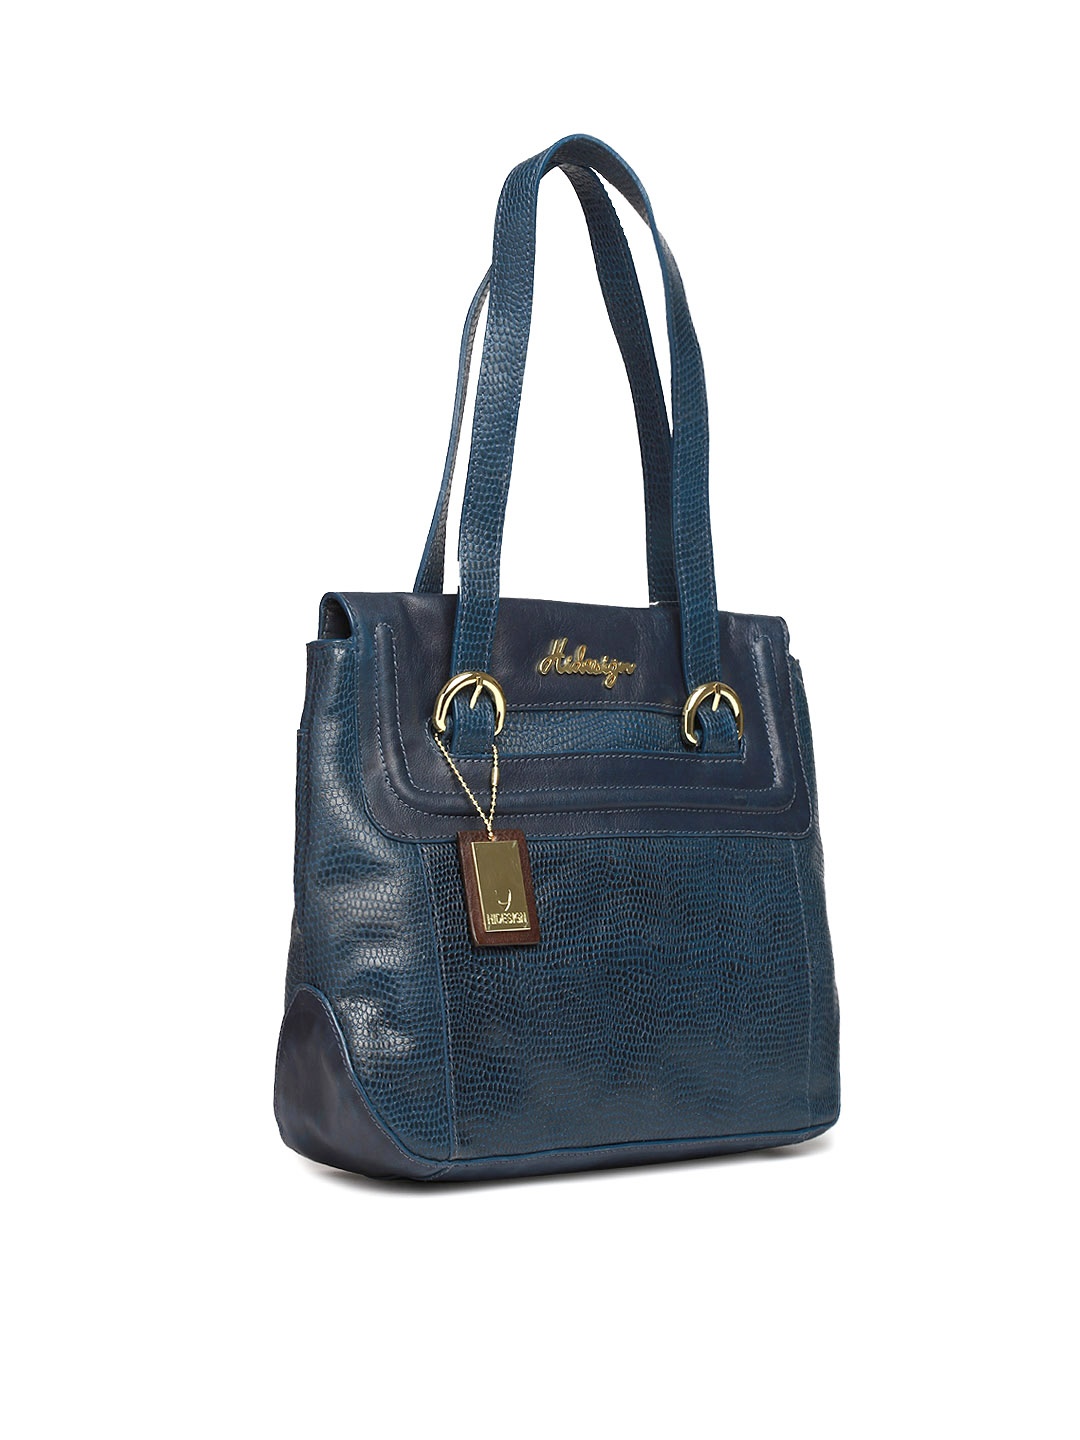 Myntra Hidesign Navy Leather Handbag 814947 | Buy Myntra Hidesign Handbags at best price online 